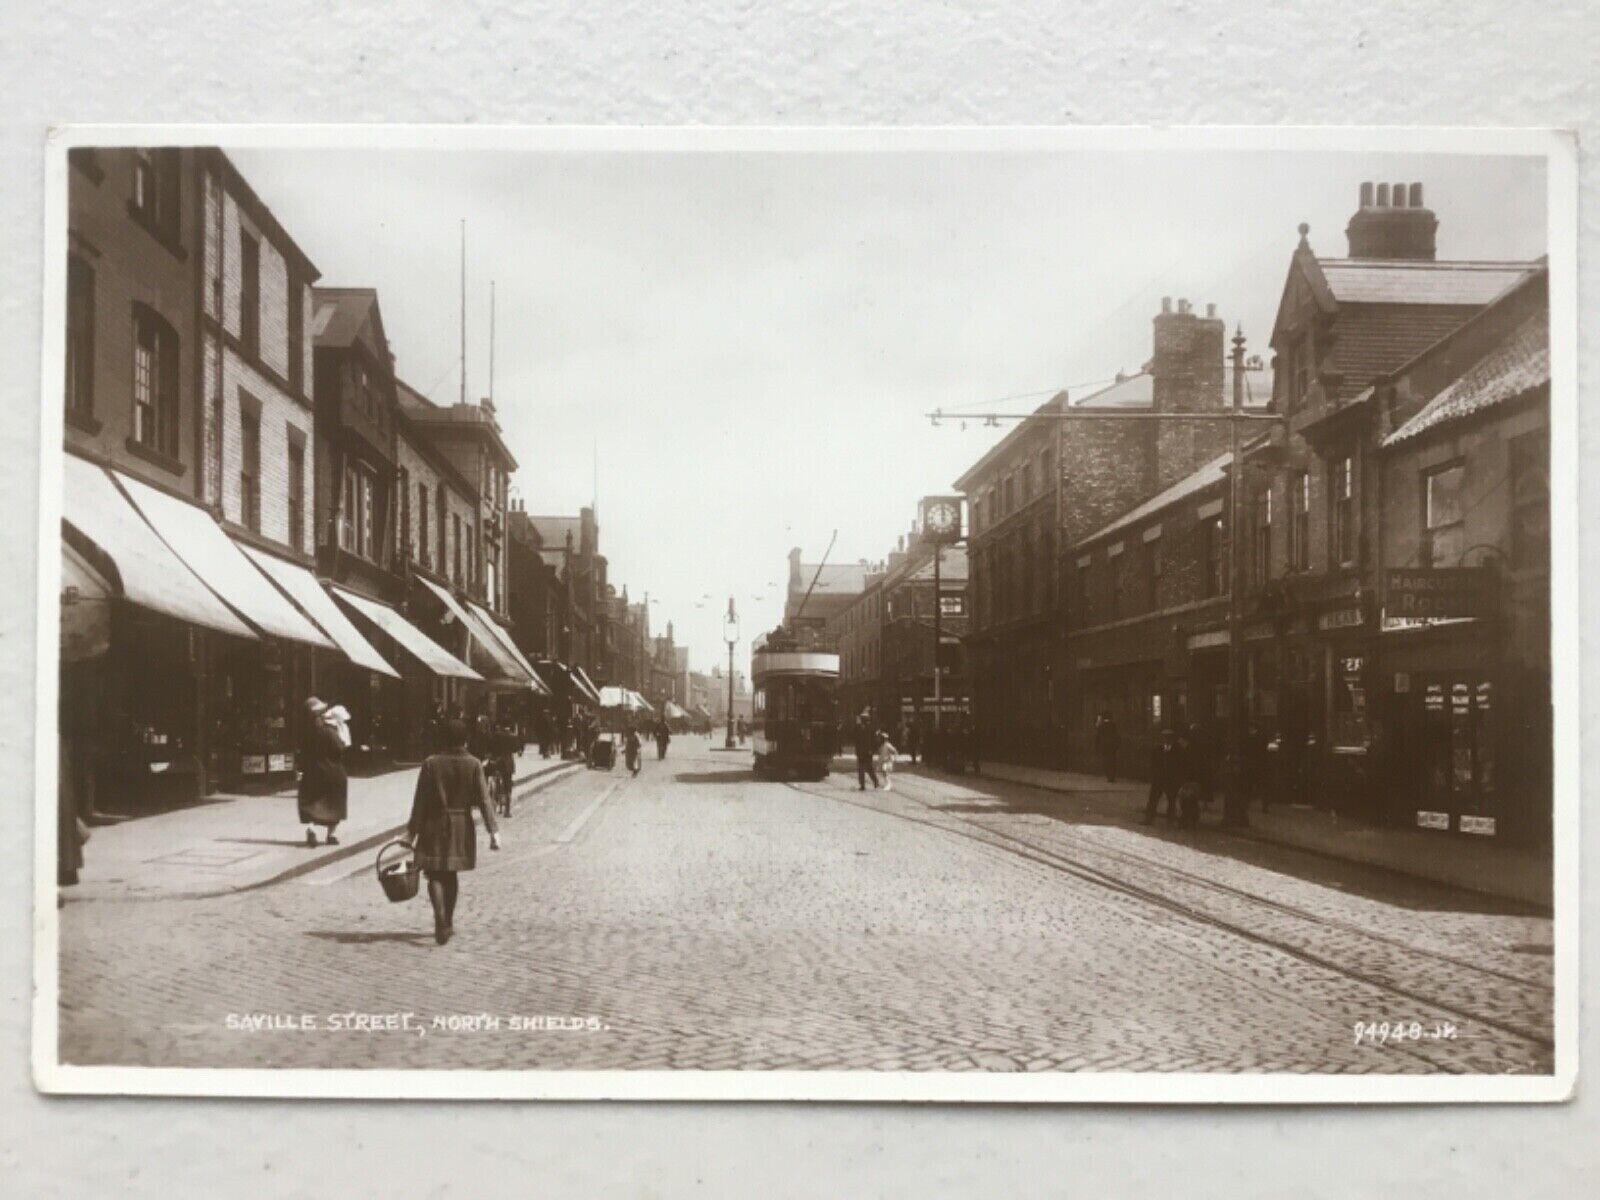 House Clearance - North Shields ‘Saville Street’ shops & tram car c.1920? RP service Tyne & Wear